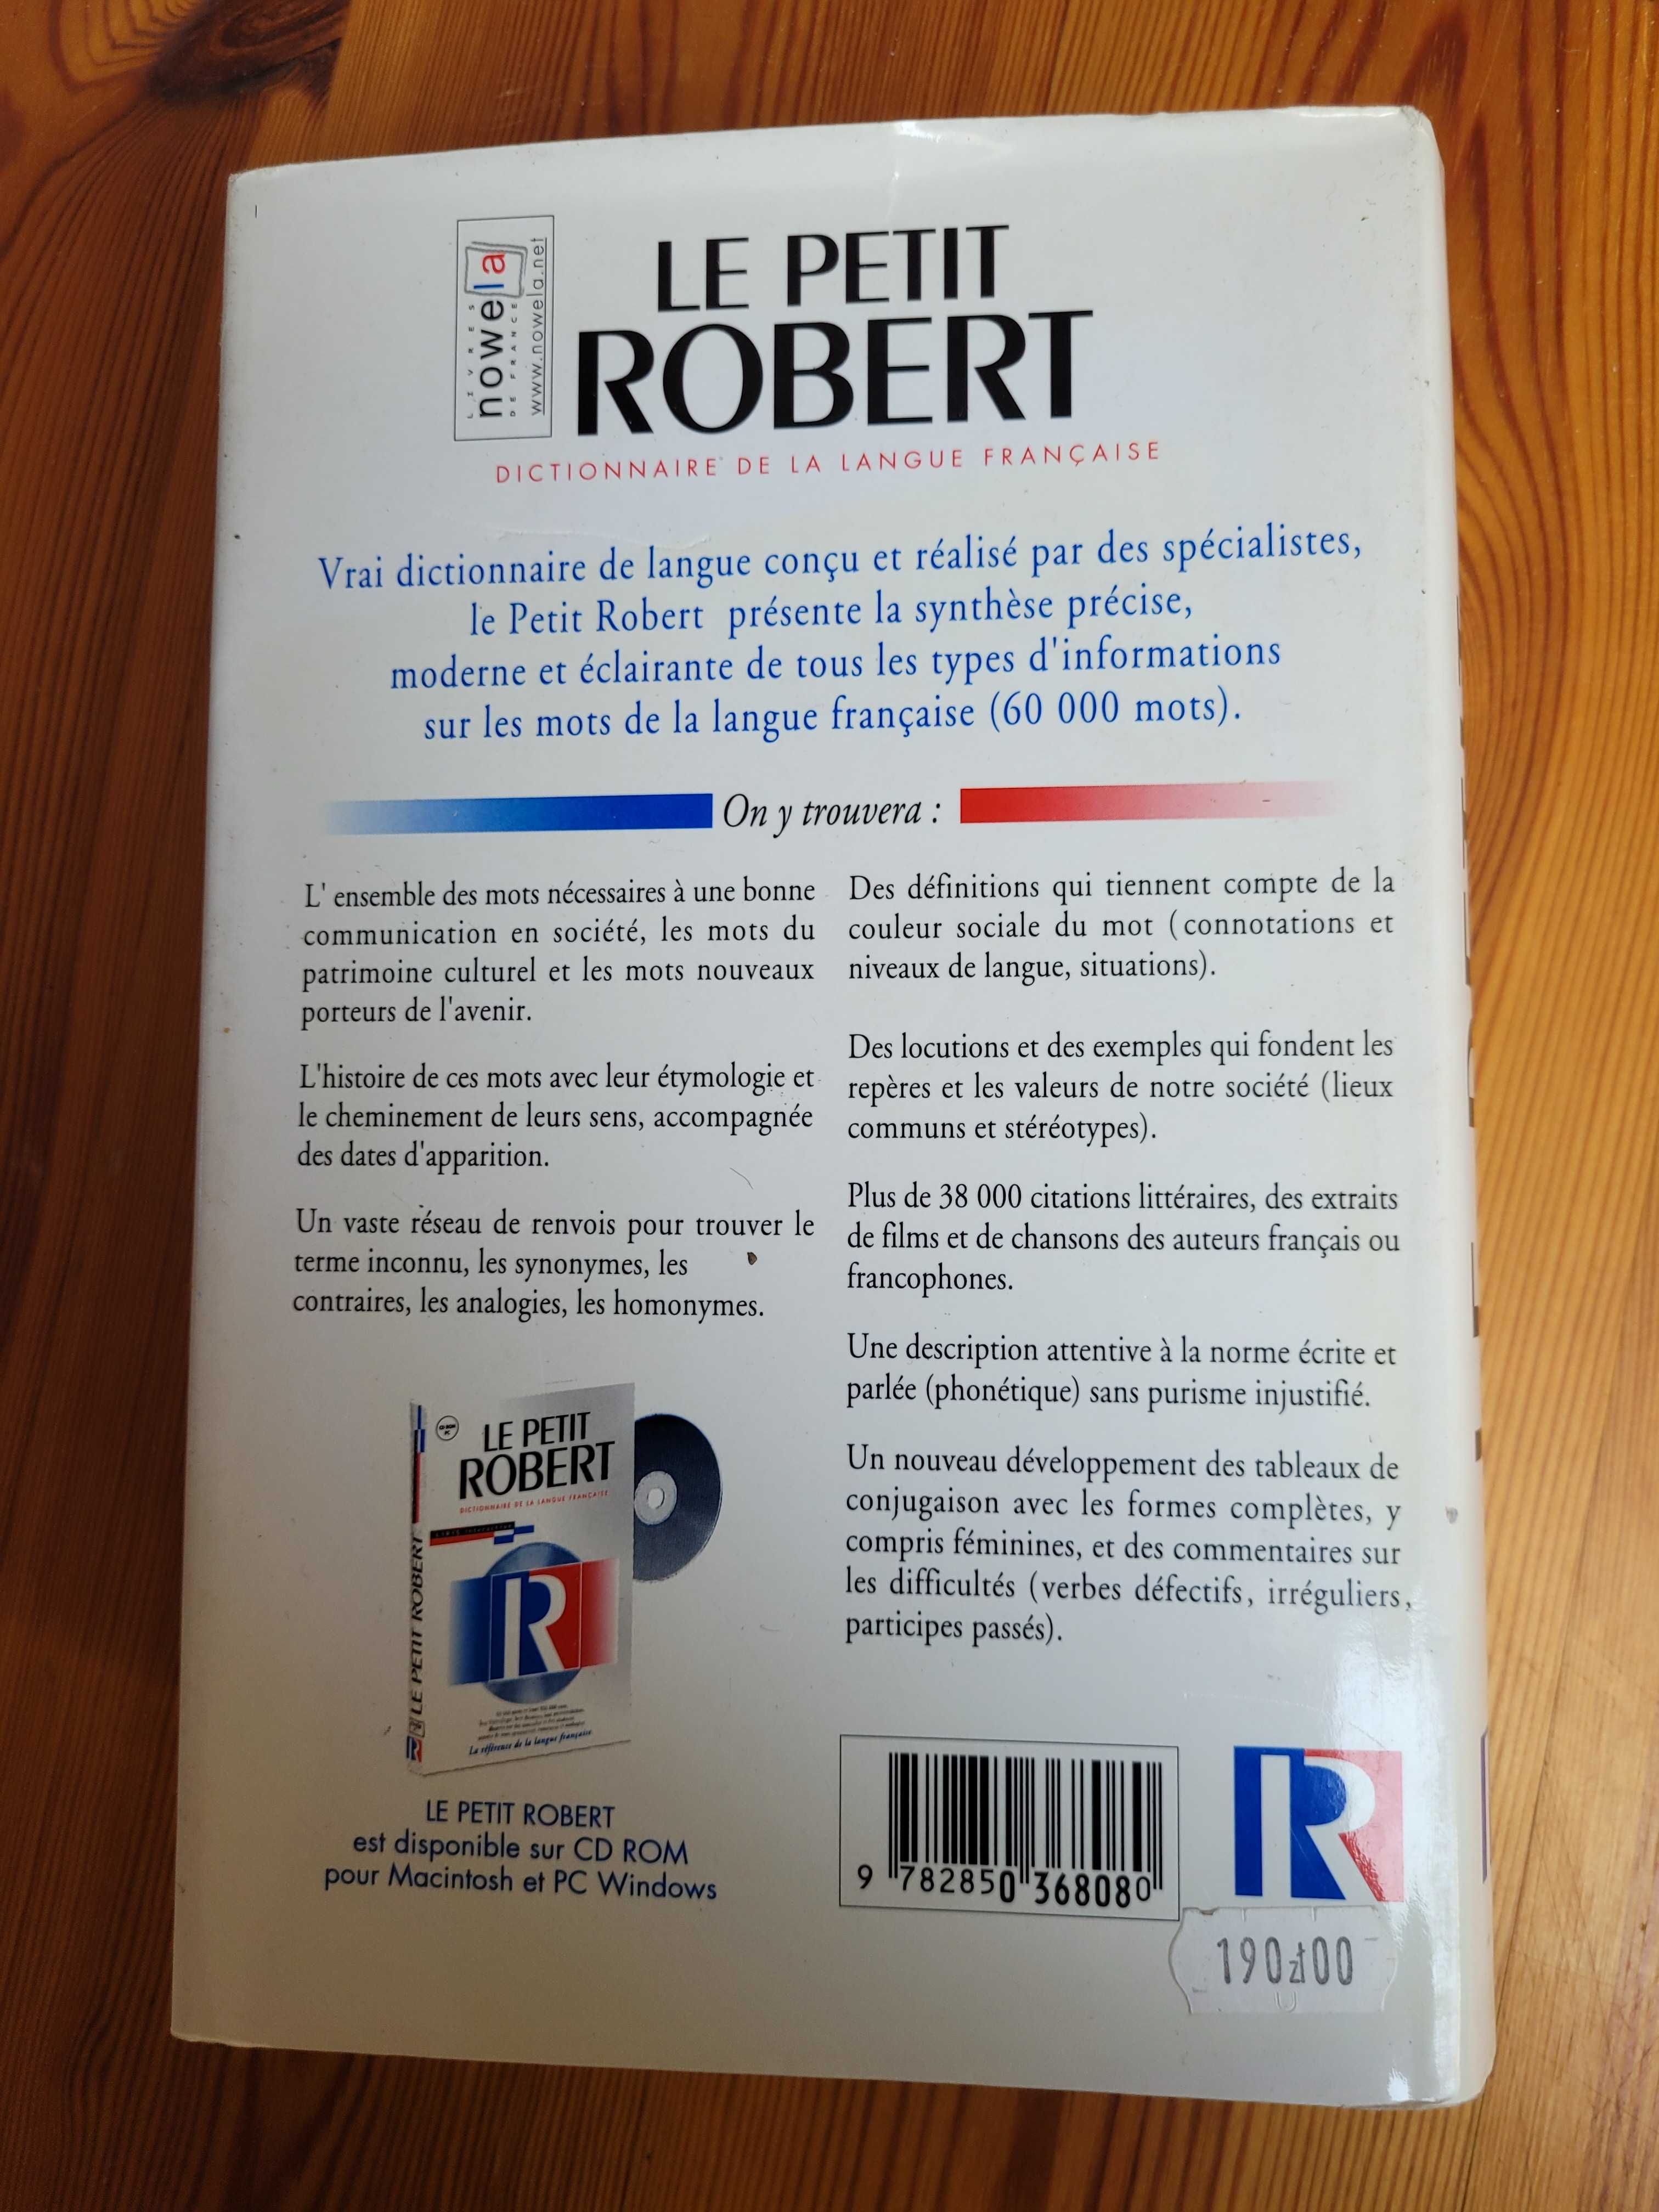 Le Petit Robert słownik języka francuskiego